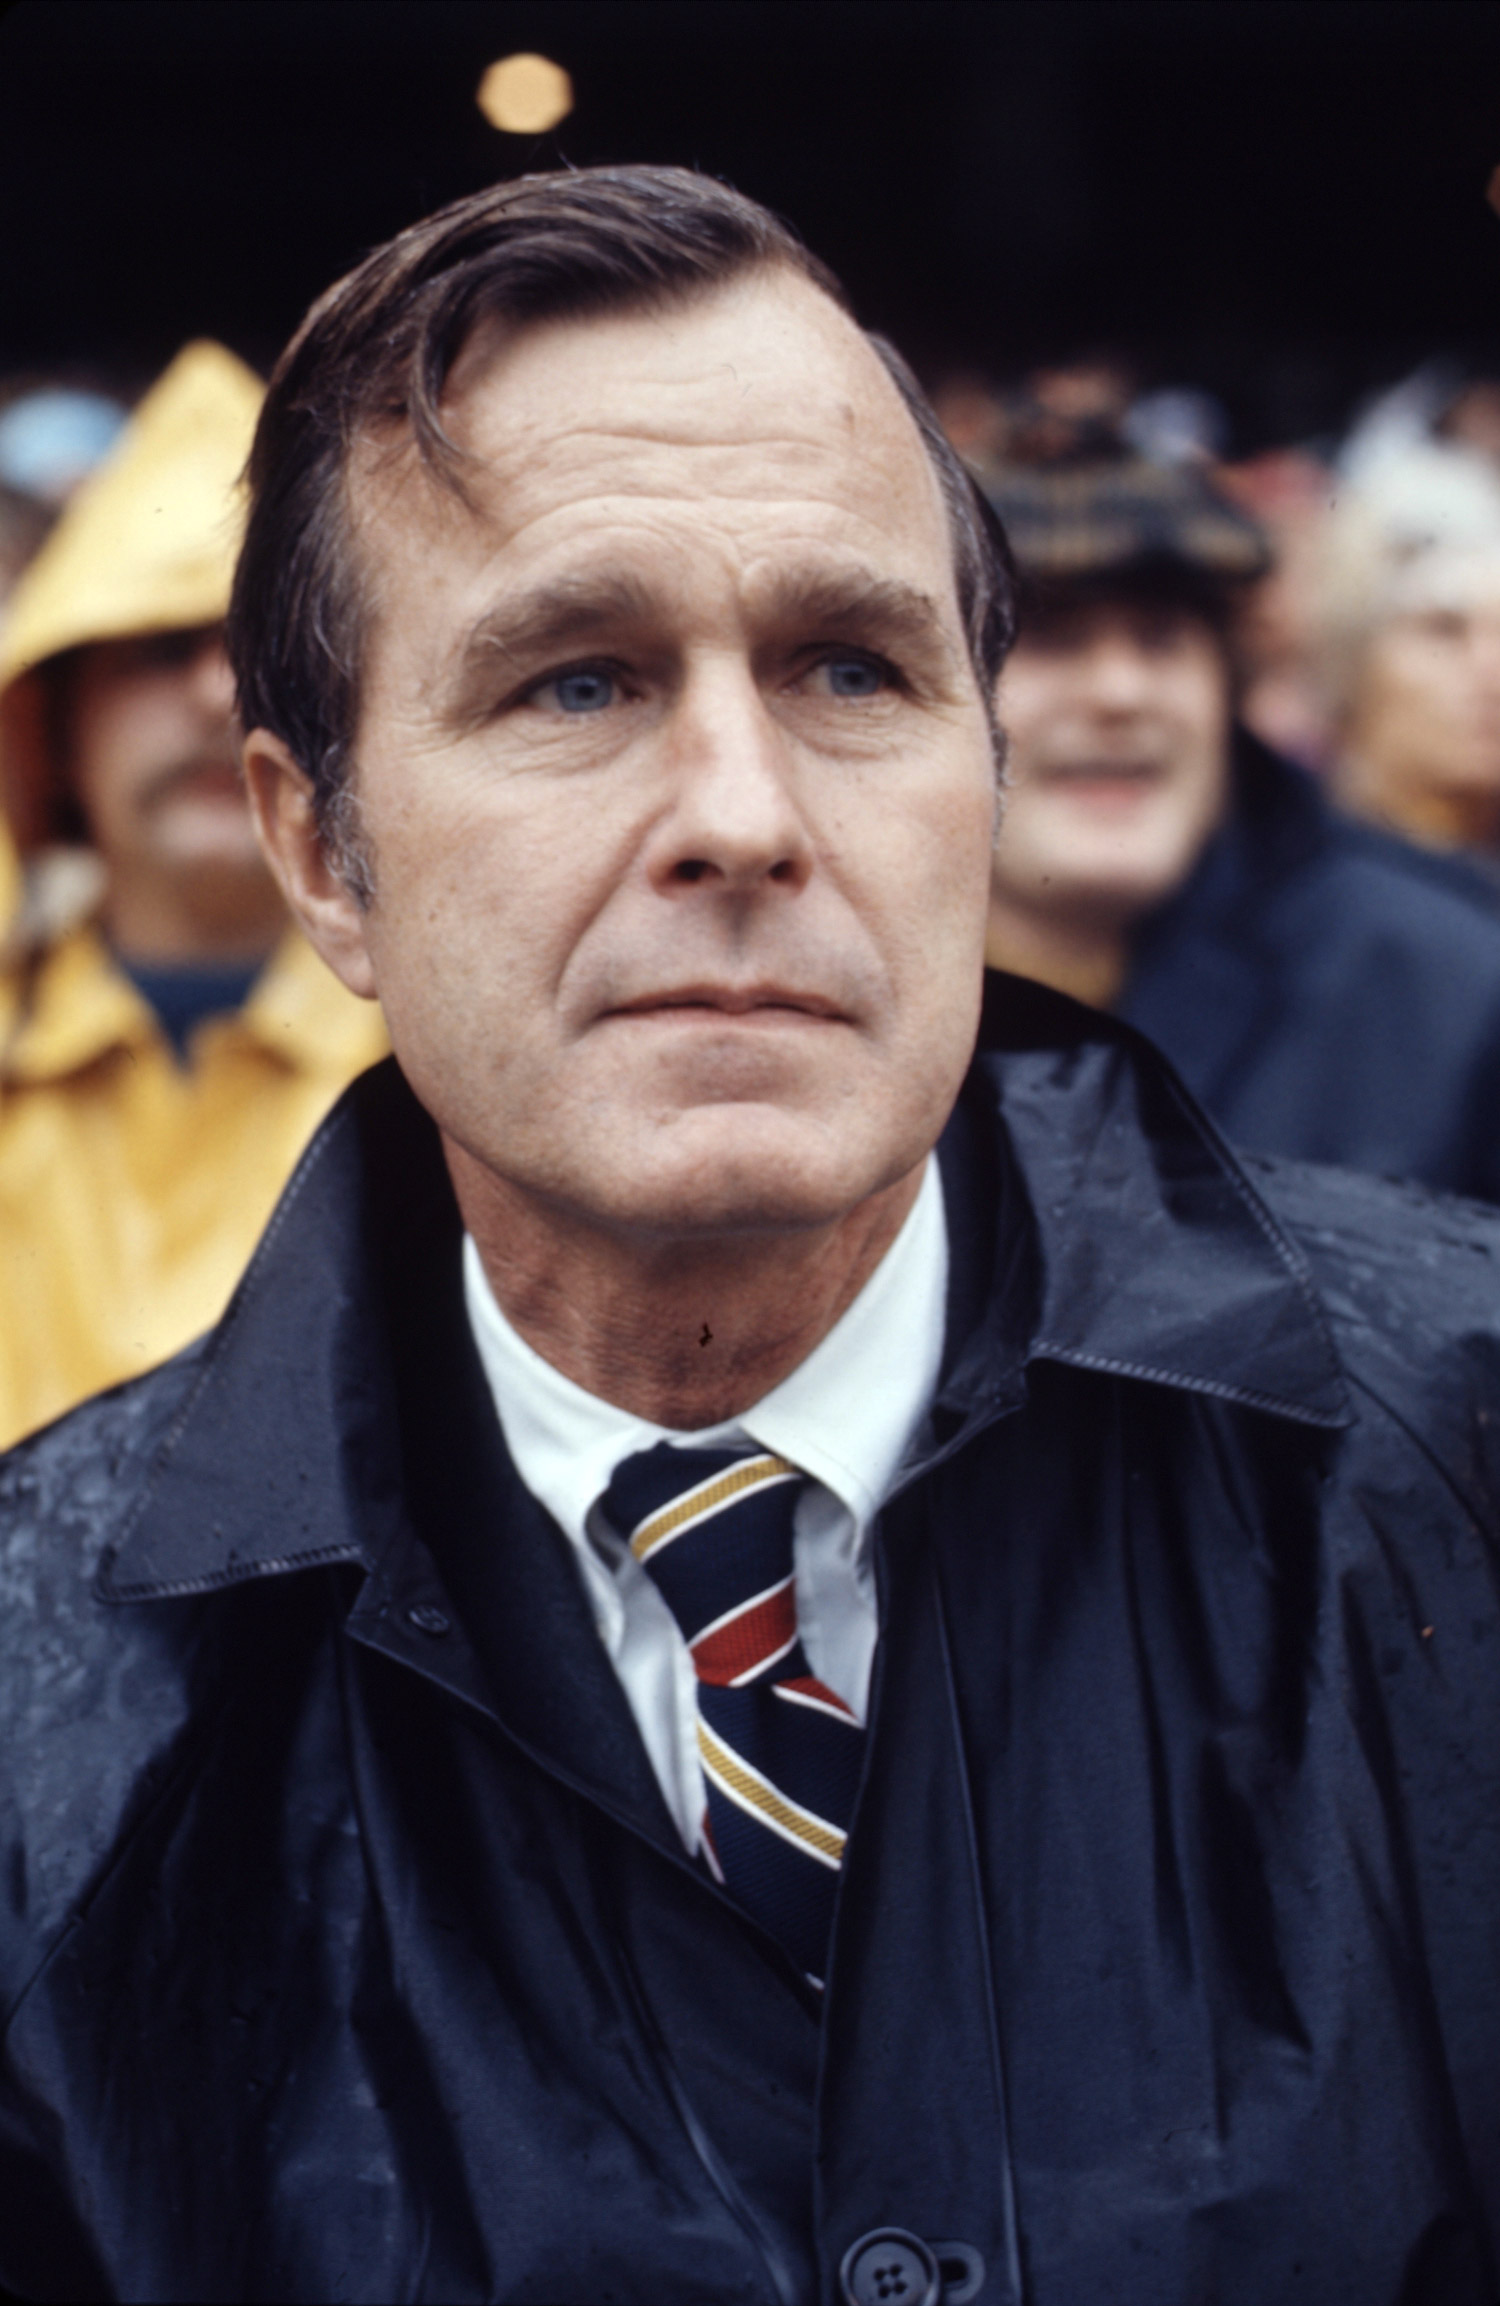 George H.W. Bush at a baseball game in 1971.